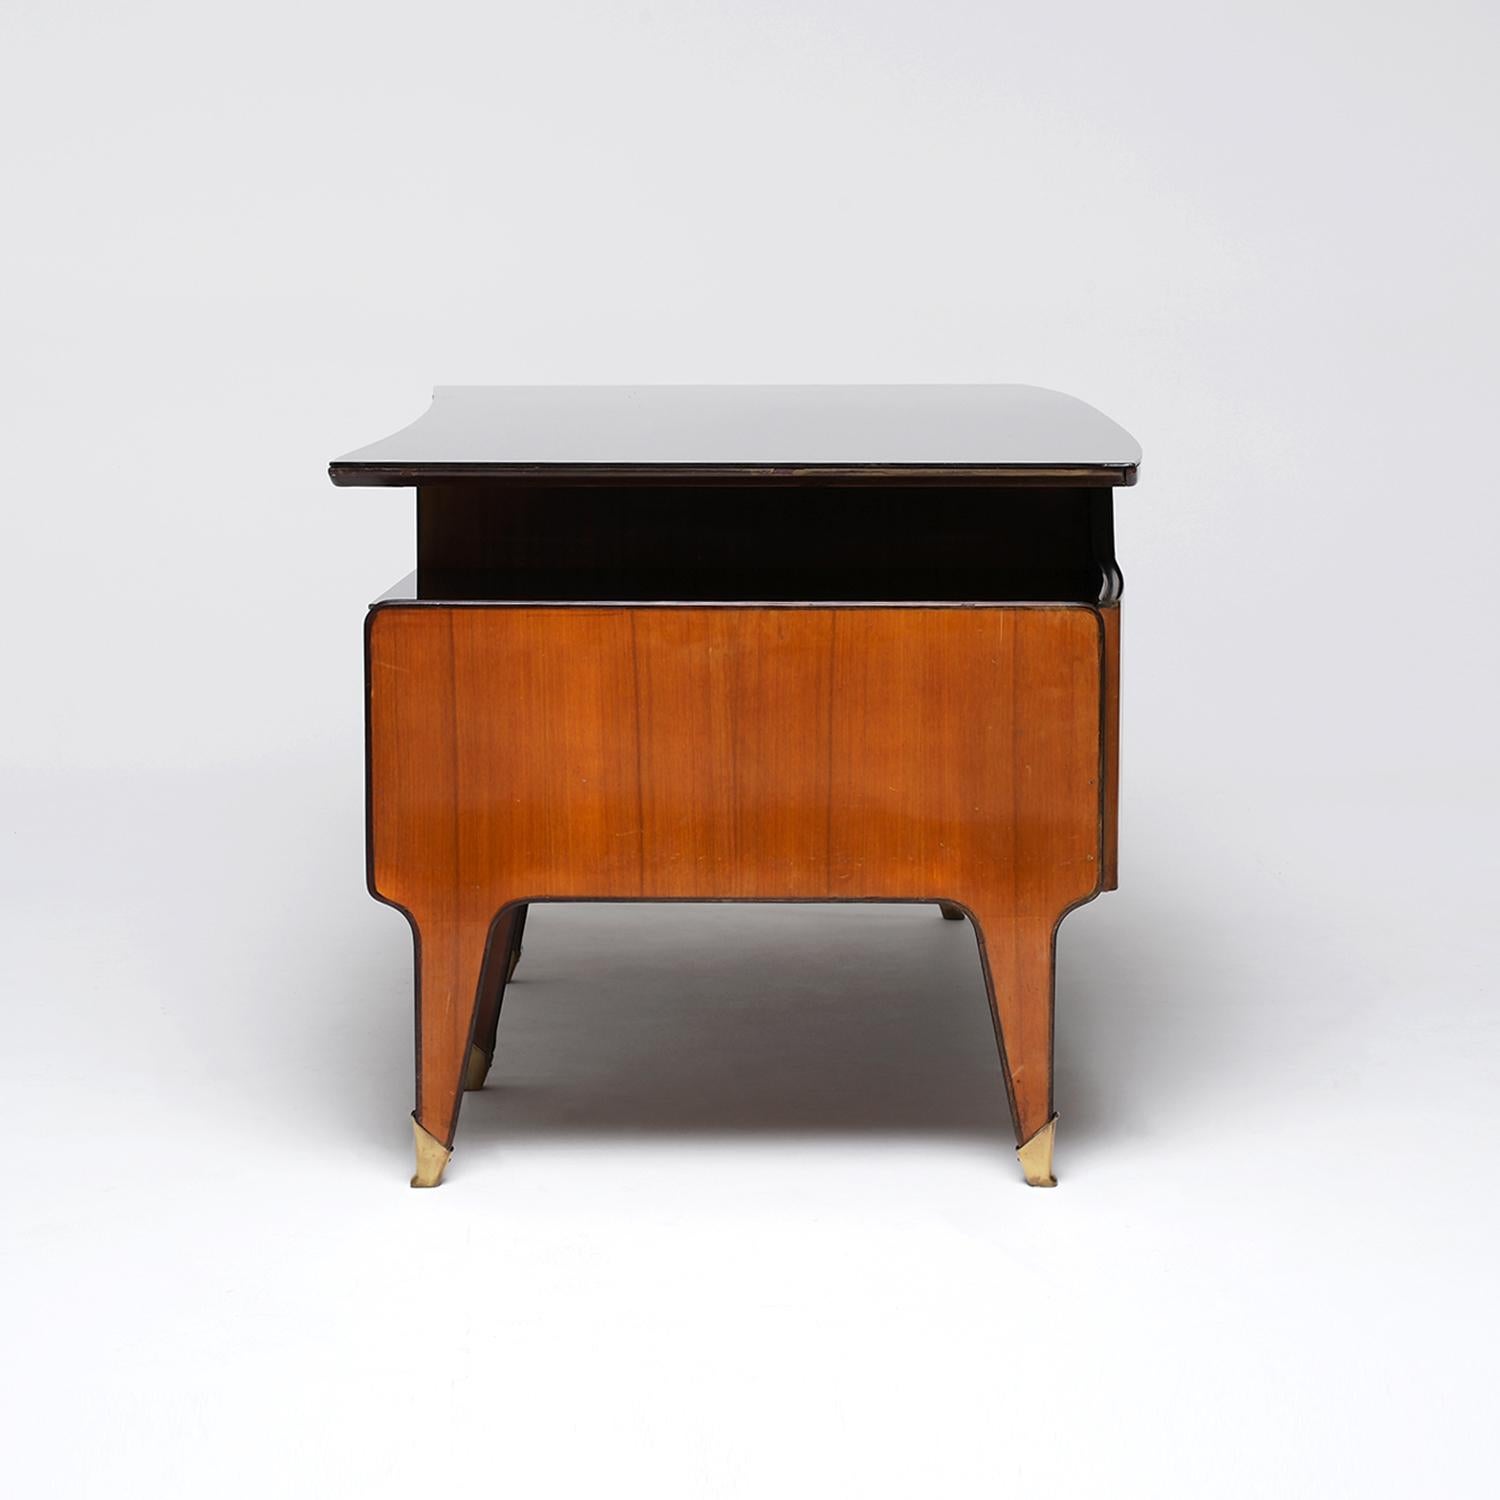 20th Century Italian Mahogany Writing Table - Vintage Desk by Vittorio Dassi For Sale 4